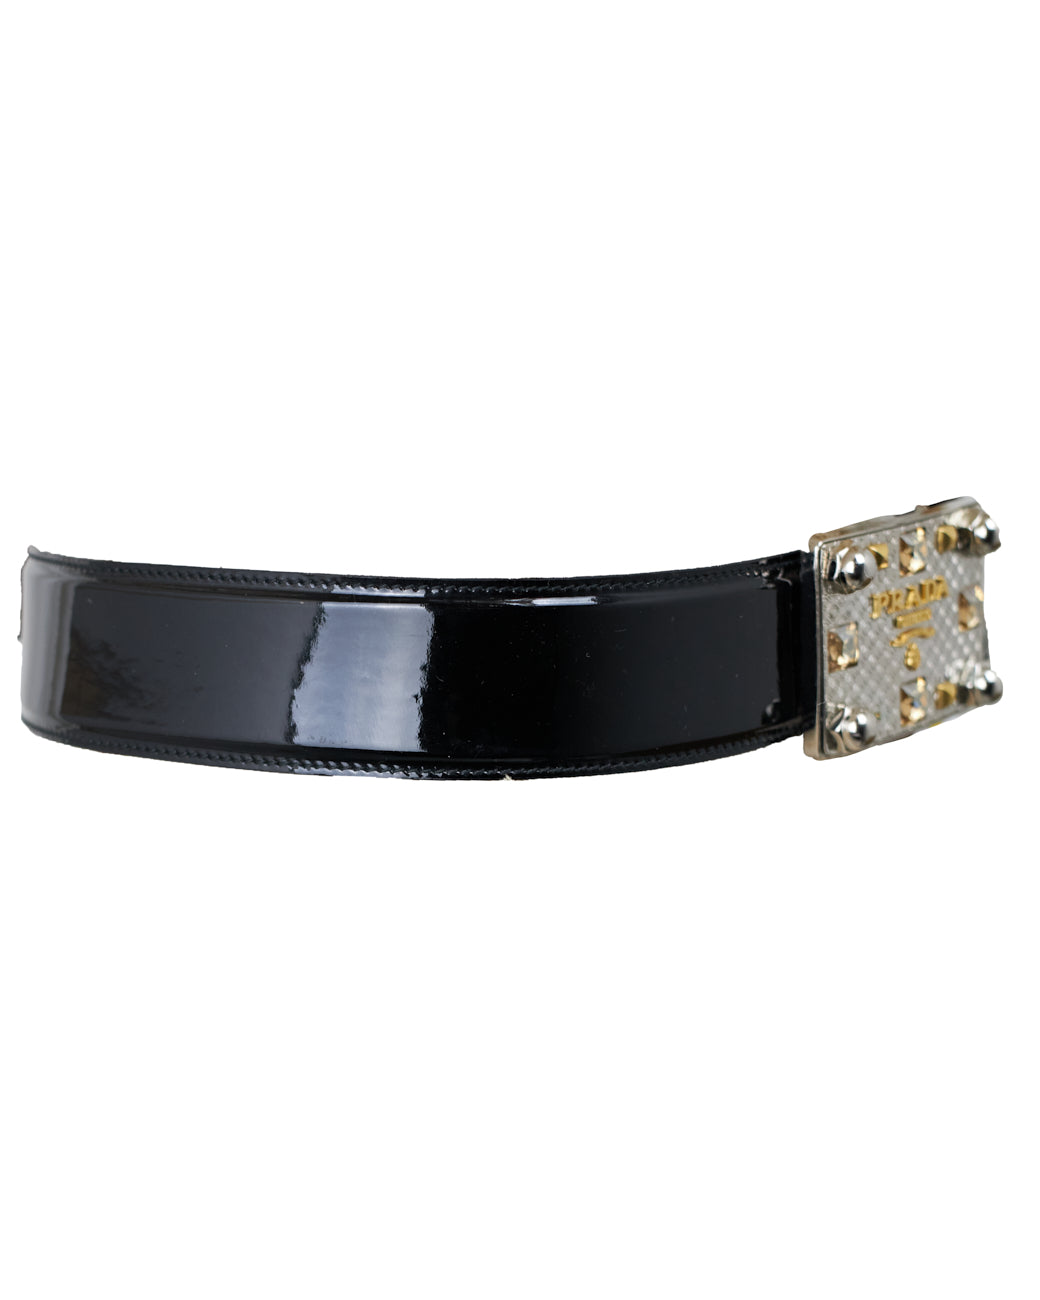 Prada Black Vinil Leather Belt - size 36